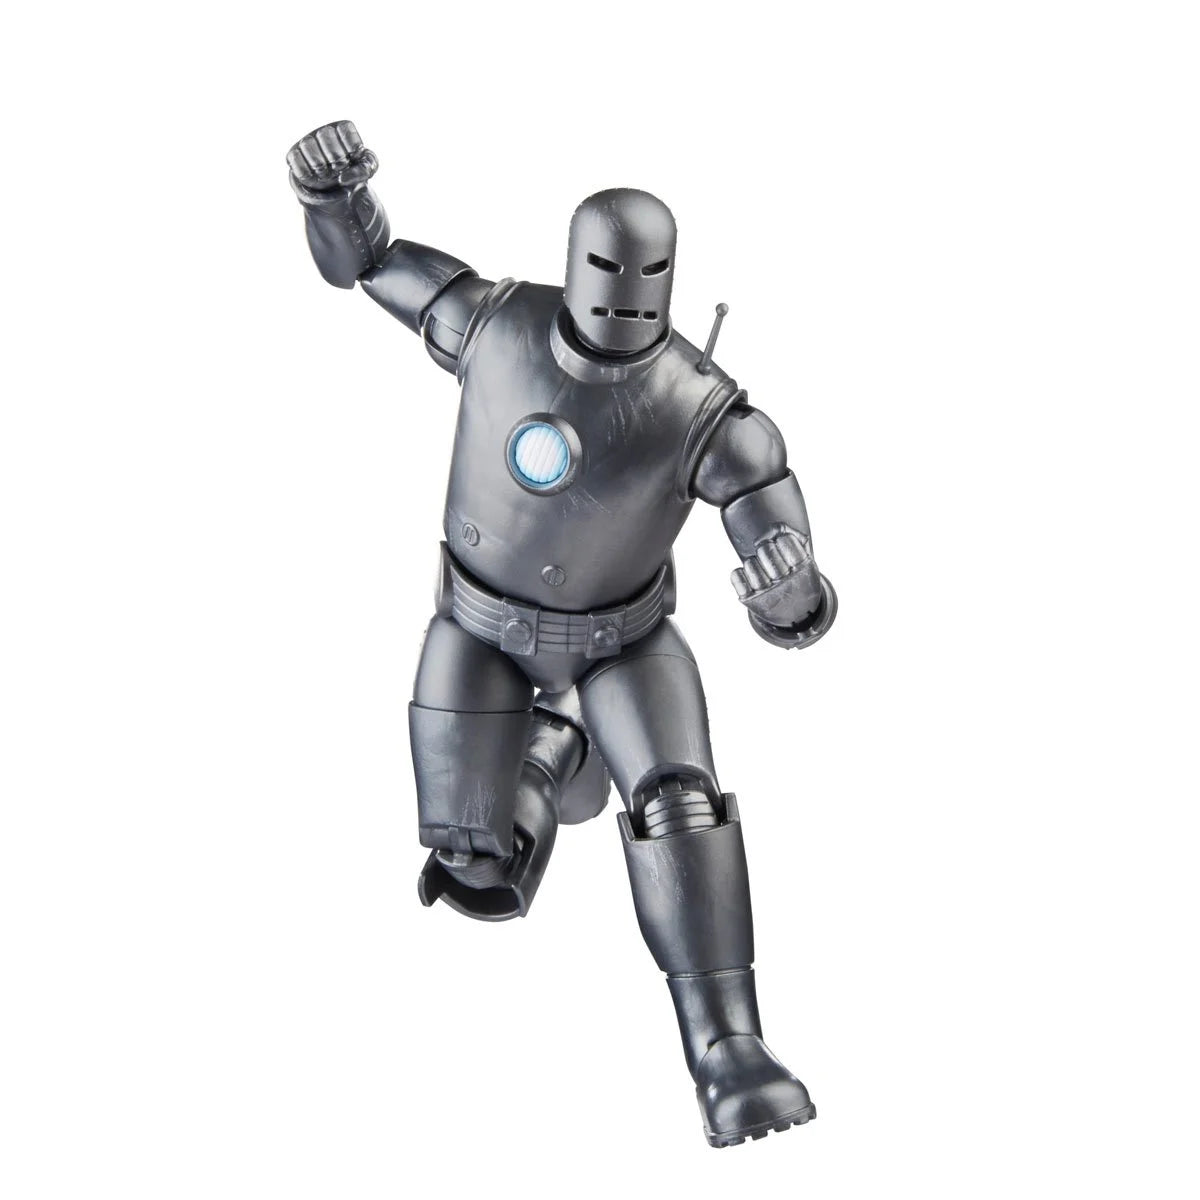 Marvel Legends Series Iron Man (Model 01) Action Figure Toy - Heretoserveyou